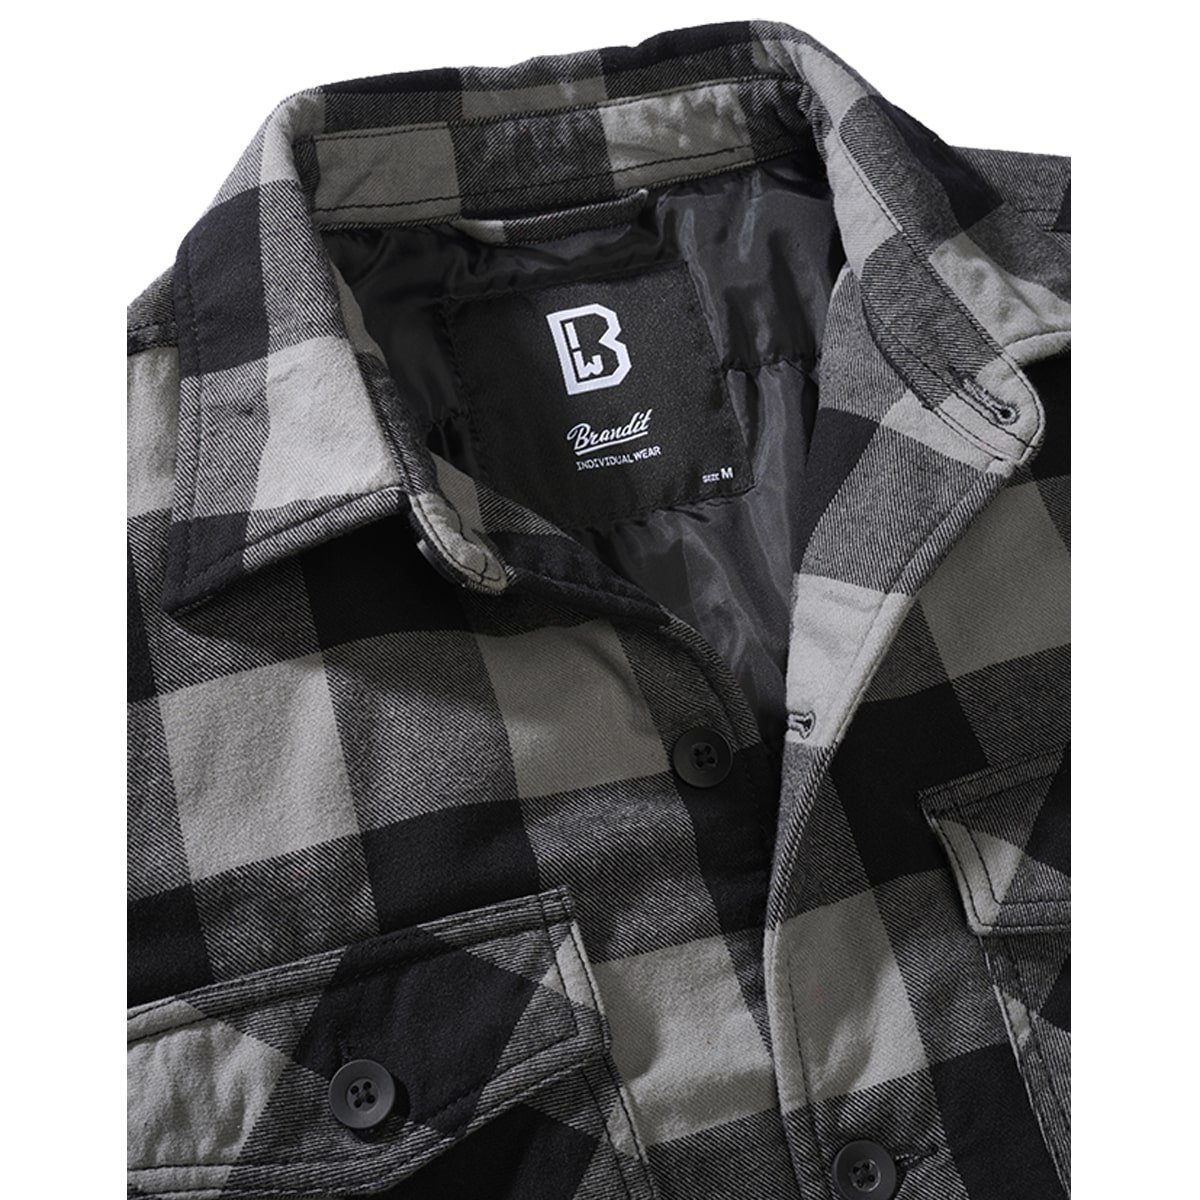 Brandit Outdoorhemd Brandit Check Grün-Schwarz Lumber gefüttert Shirt Gefüttert